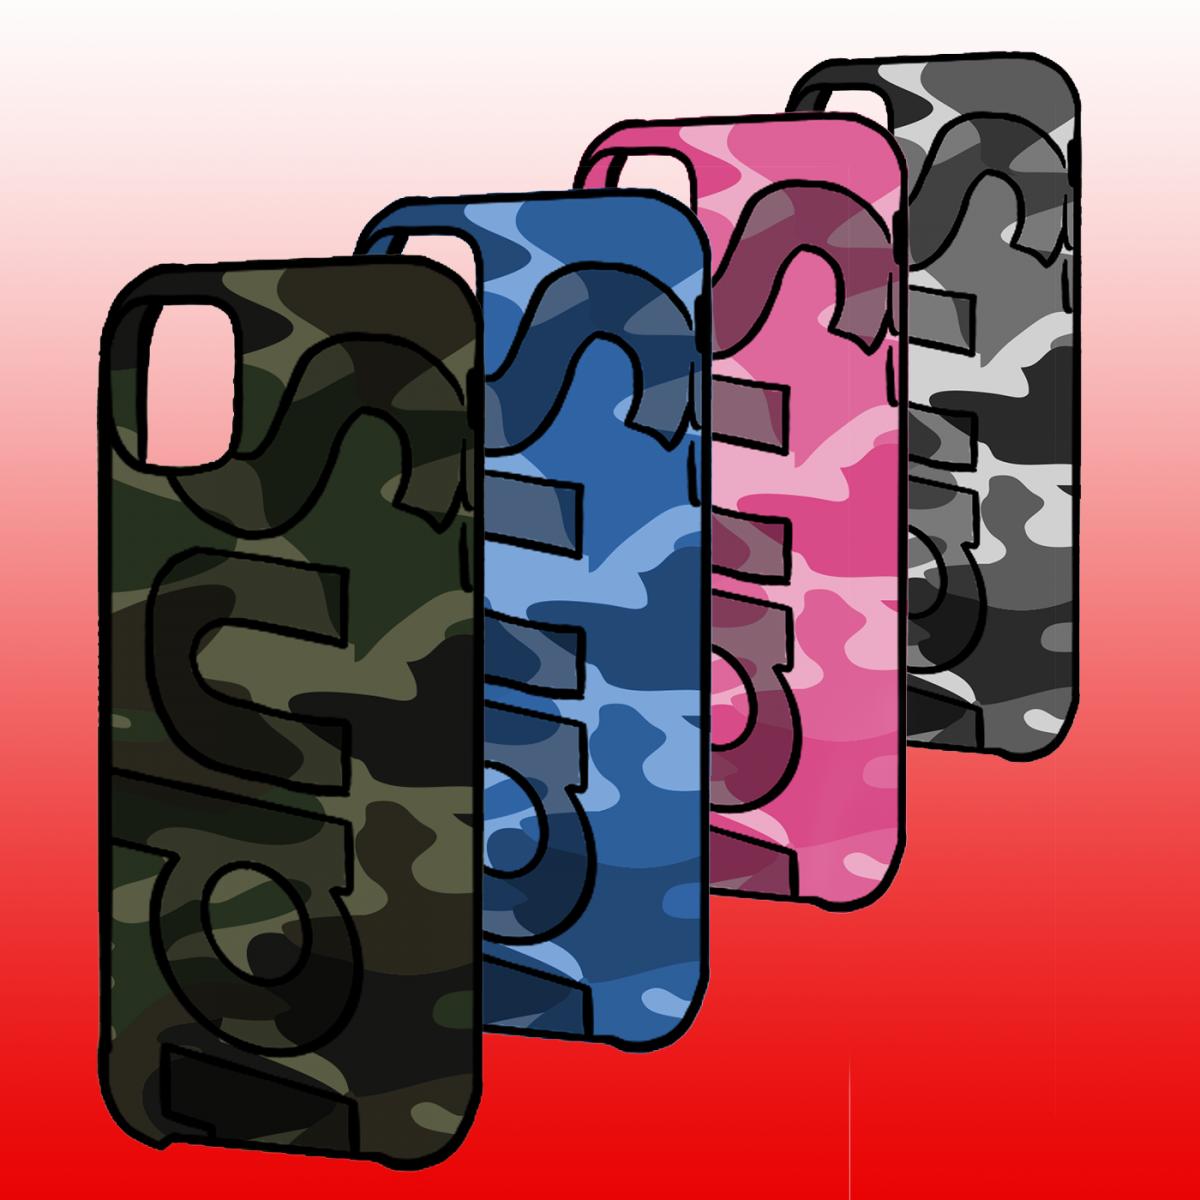 Supreme Camo iPhone Case Pink Camo - FW20 - US